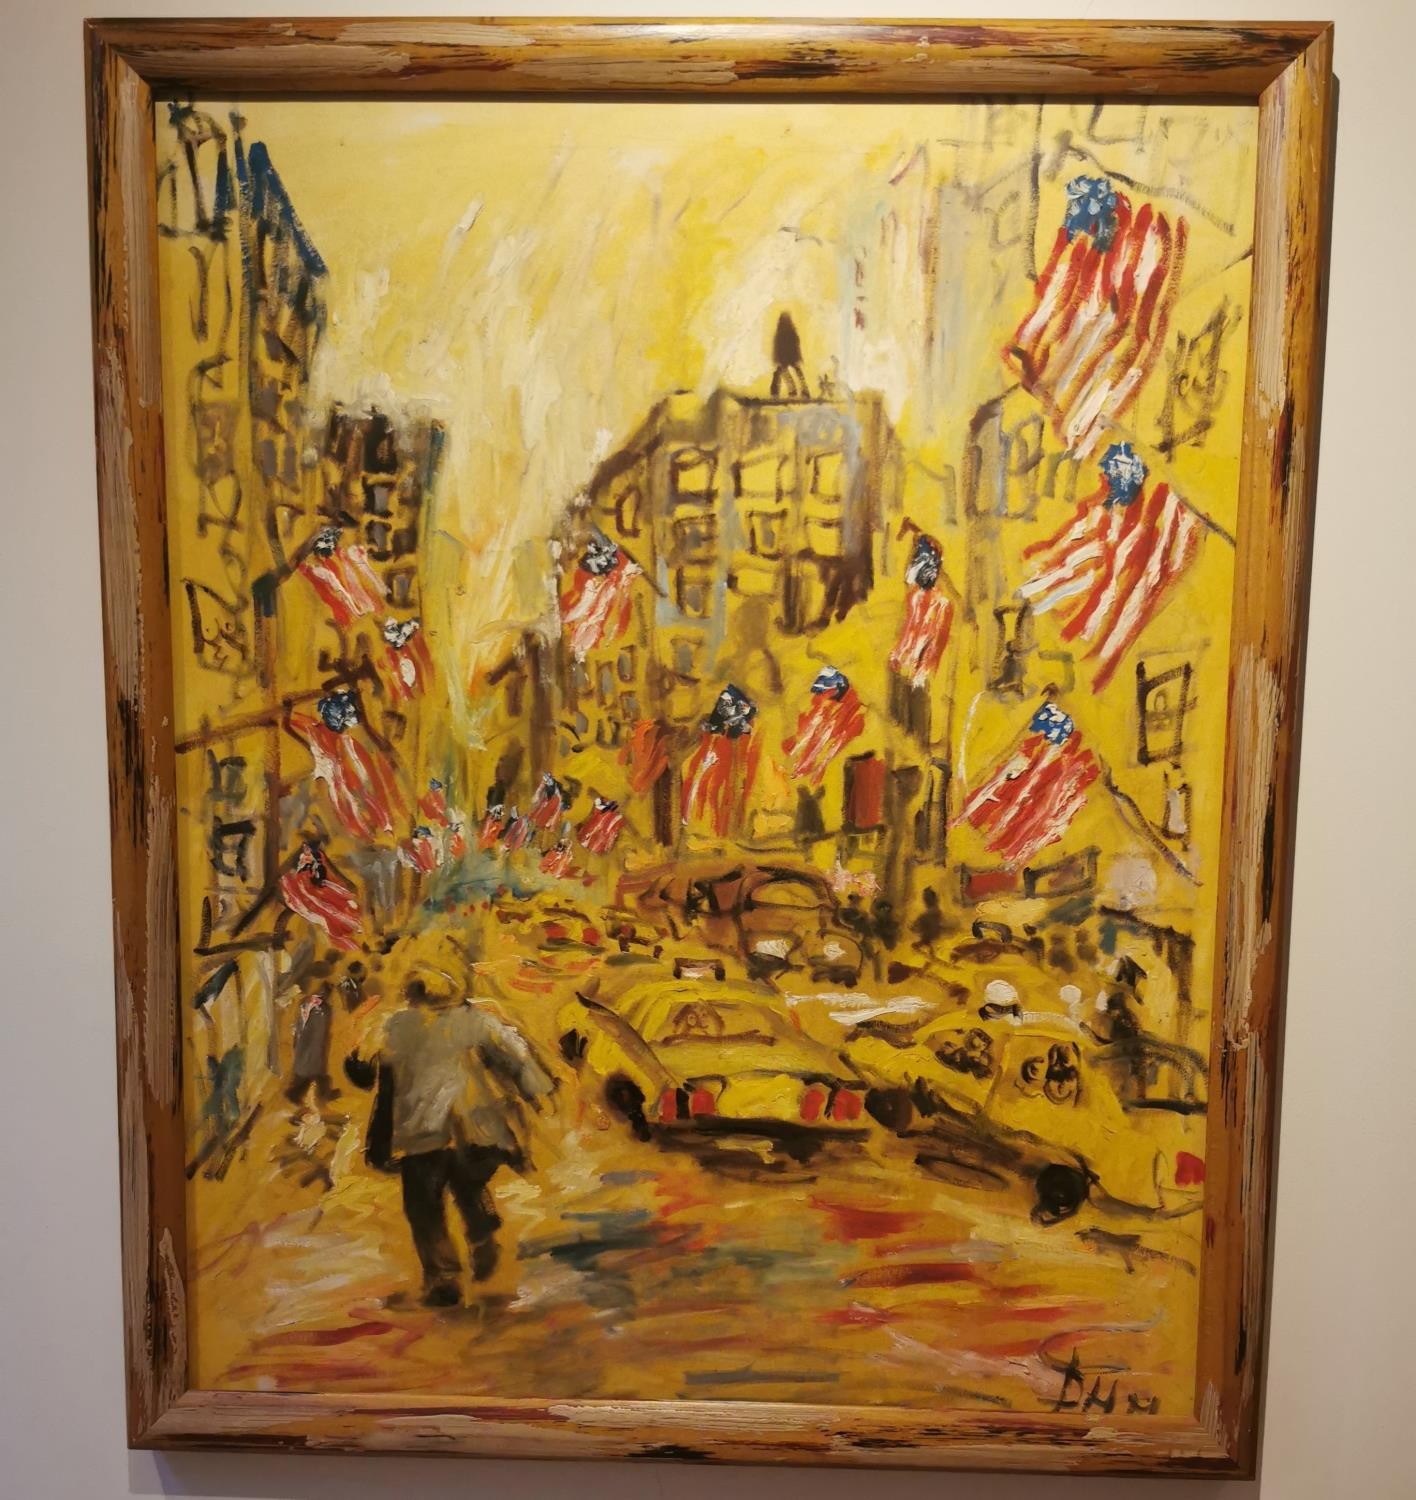 Daniele Mascaretti a.k.a "BoBo", oil on canvas of 5th Avenue with the Stars and Stripes, - Image 2 of 4